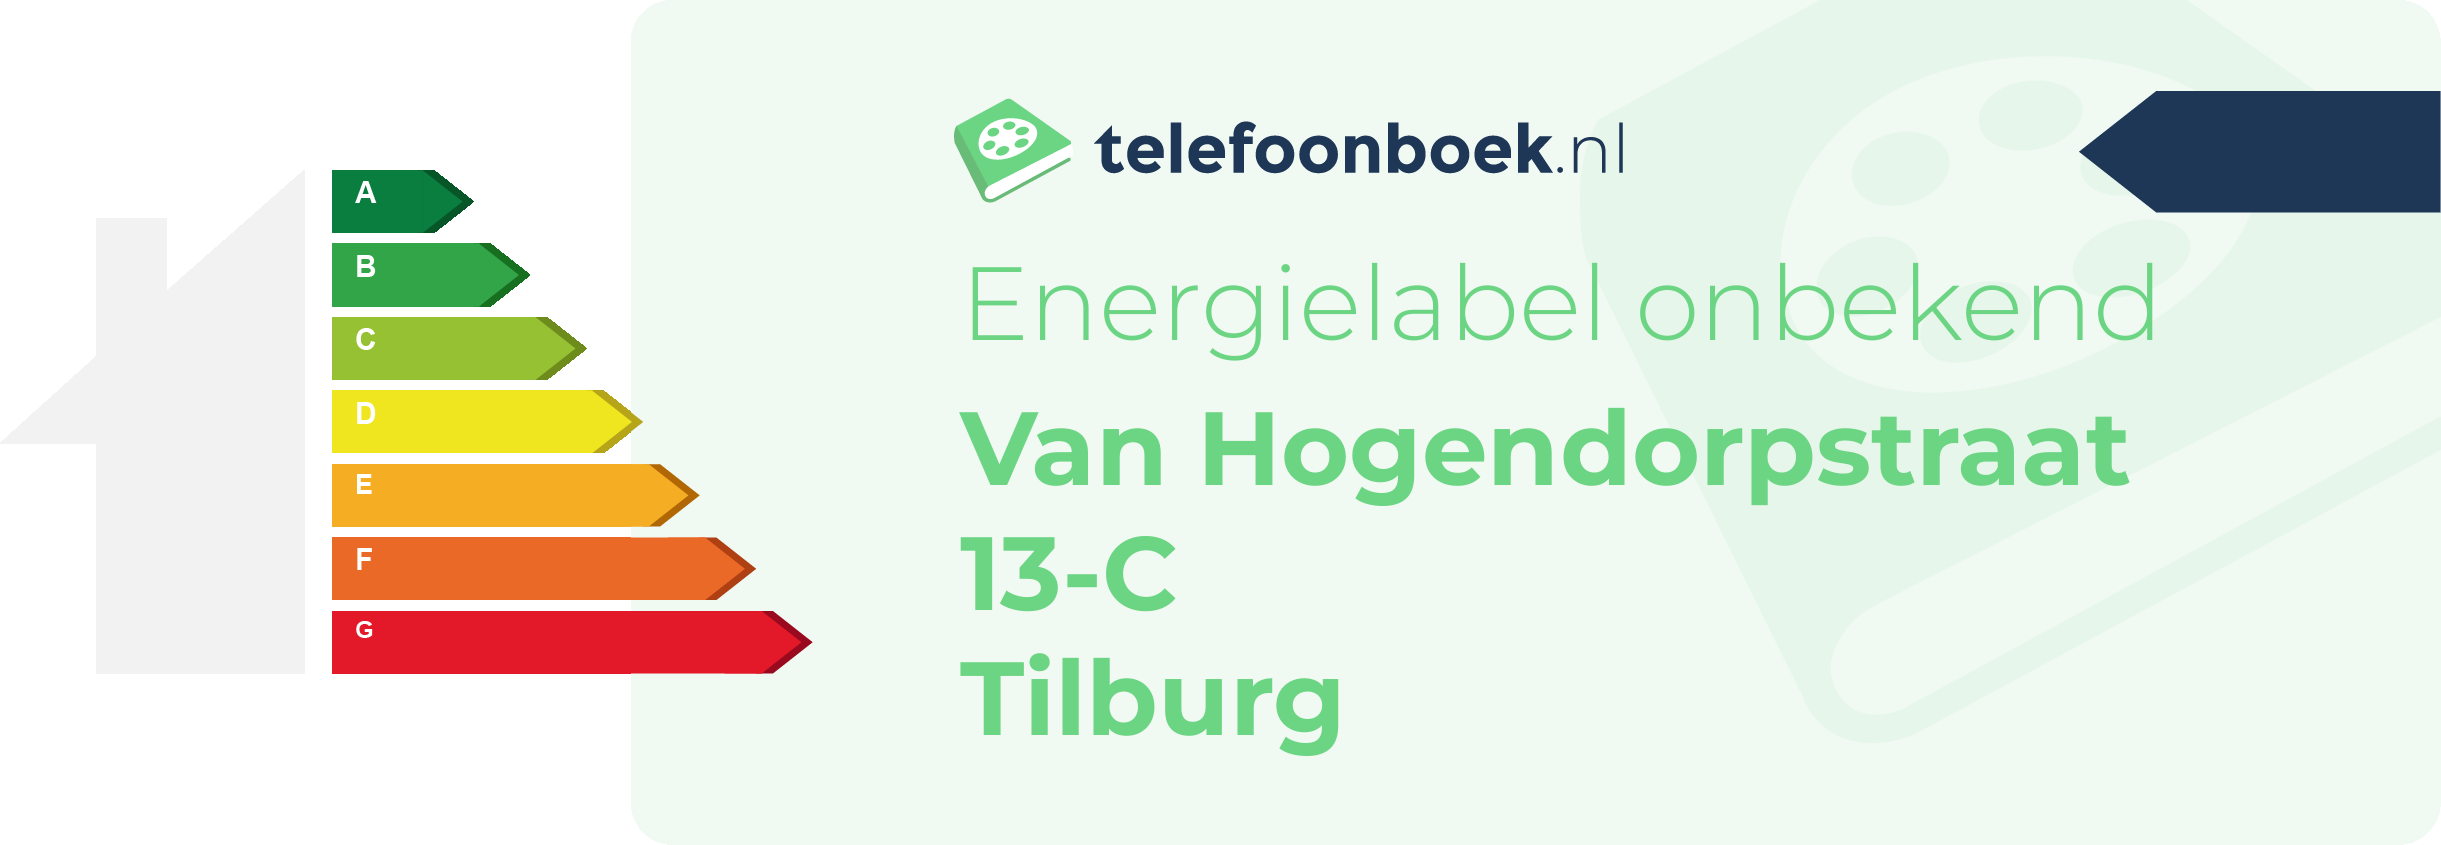 Energielabel Van Hogendorpstraat 13-C Tilburg